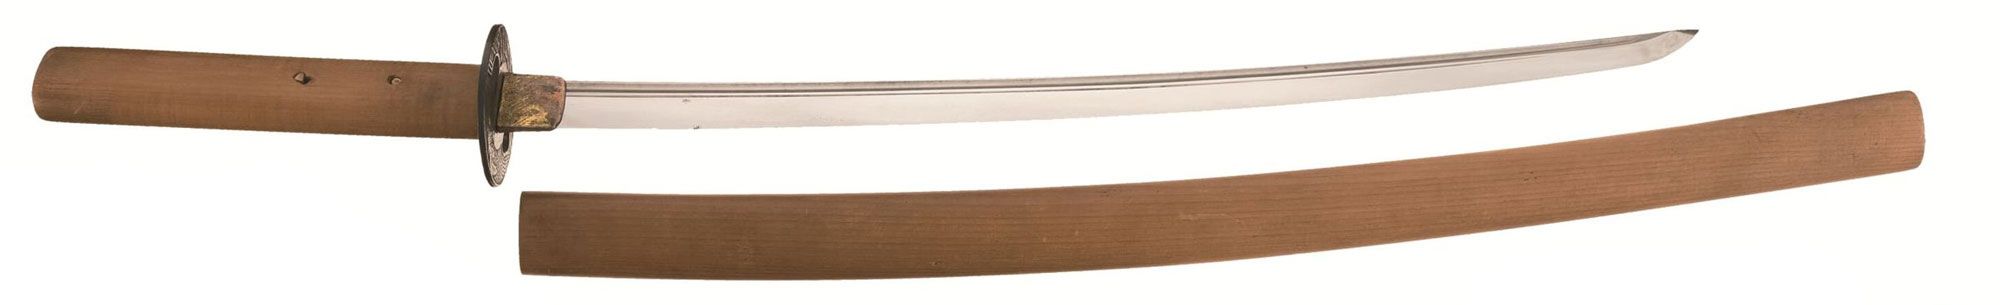 Lot 3299: Japanese Sword